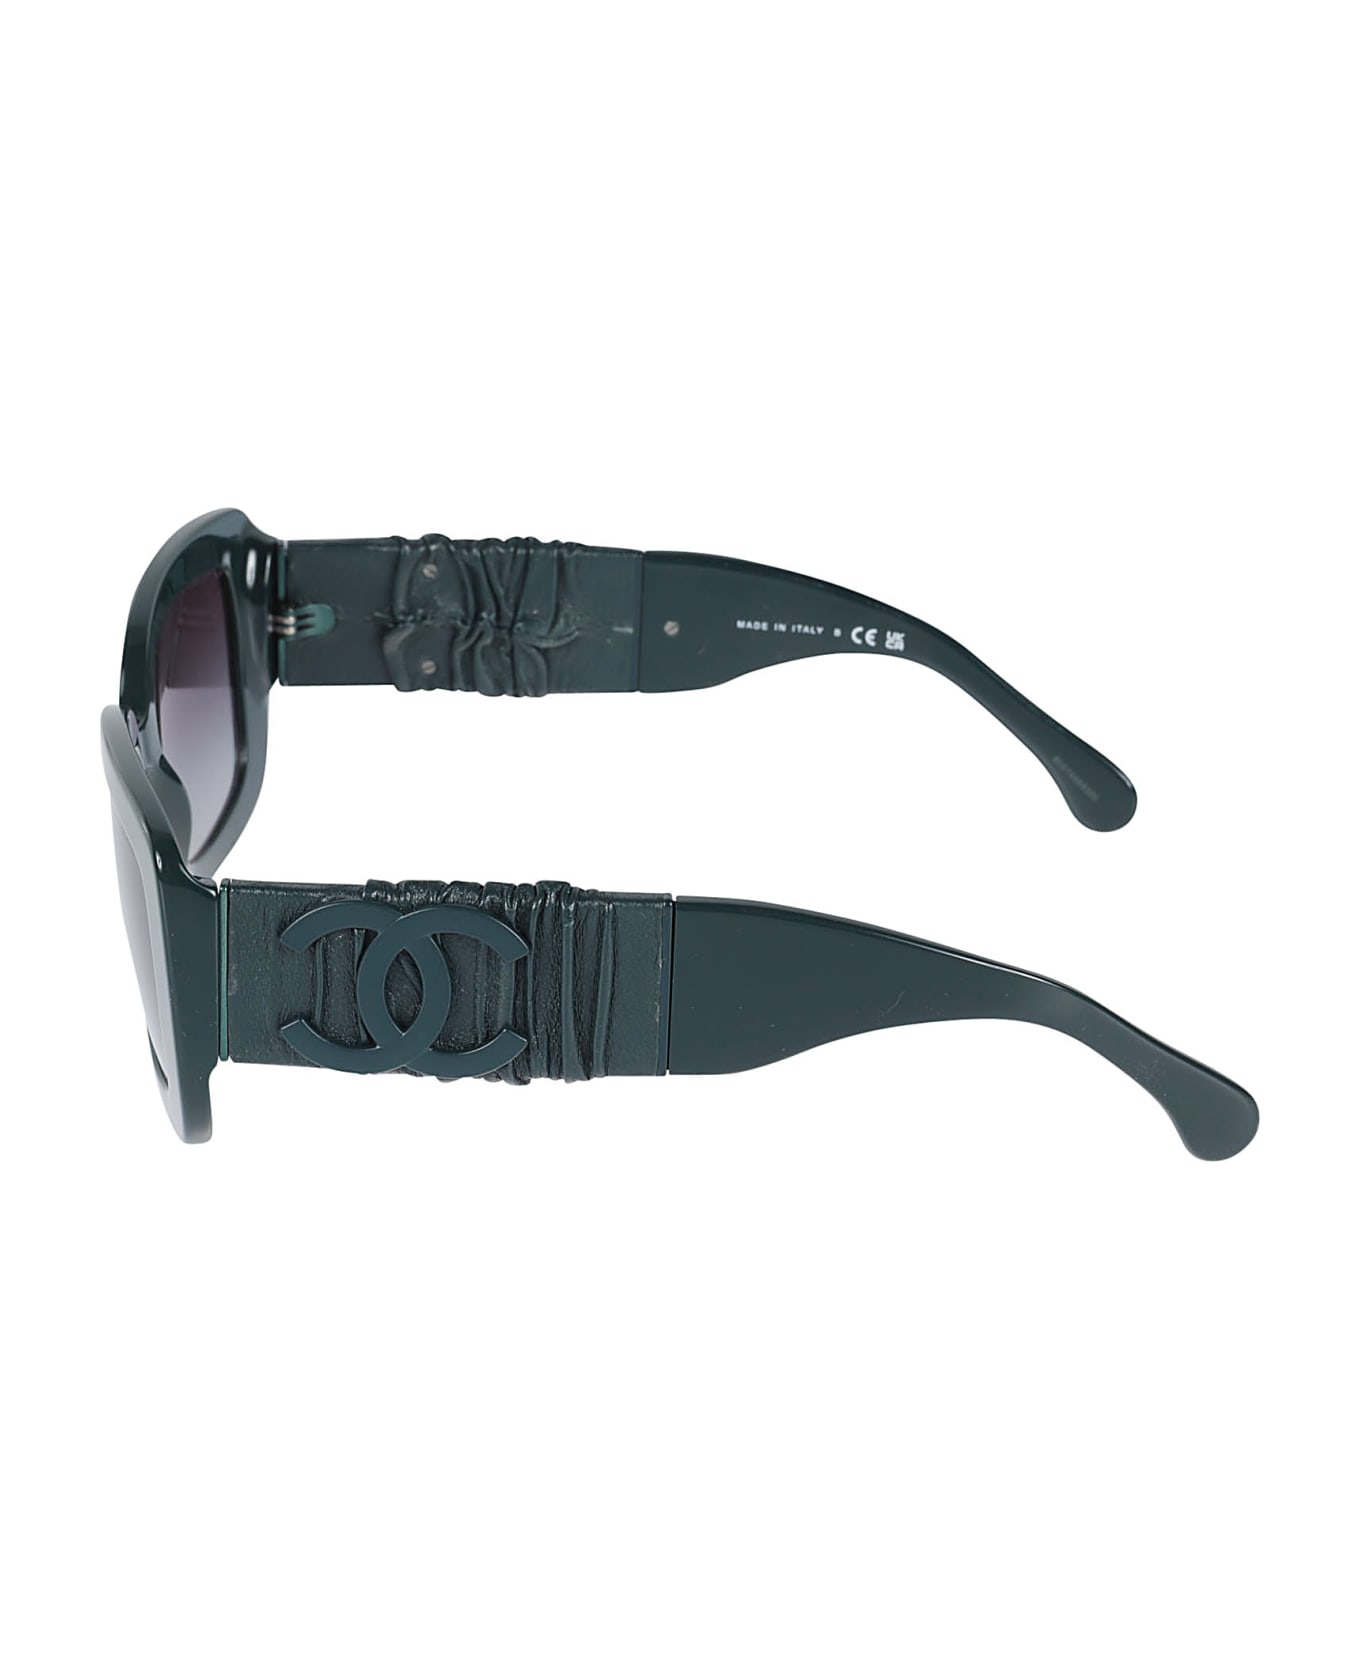 Chanel Square Frame Sunglasses - 1459s6